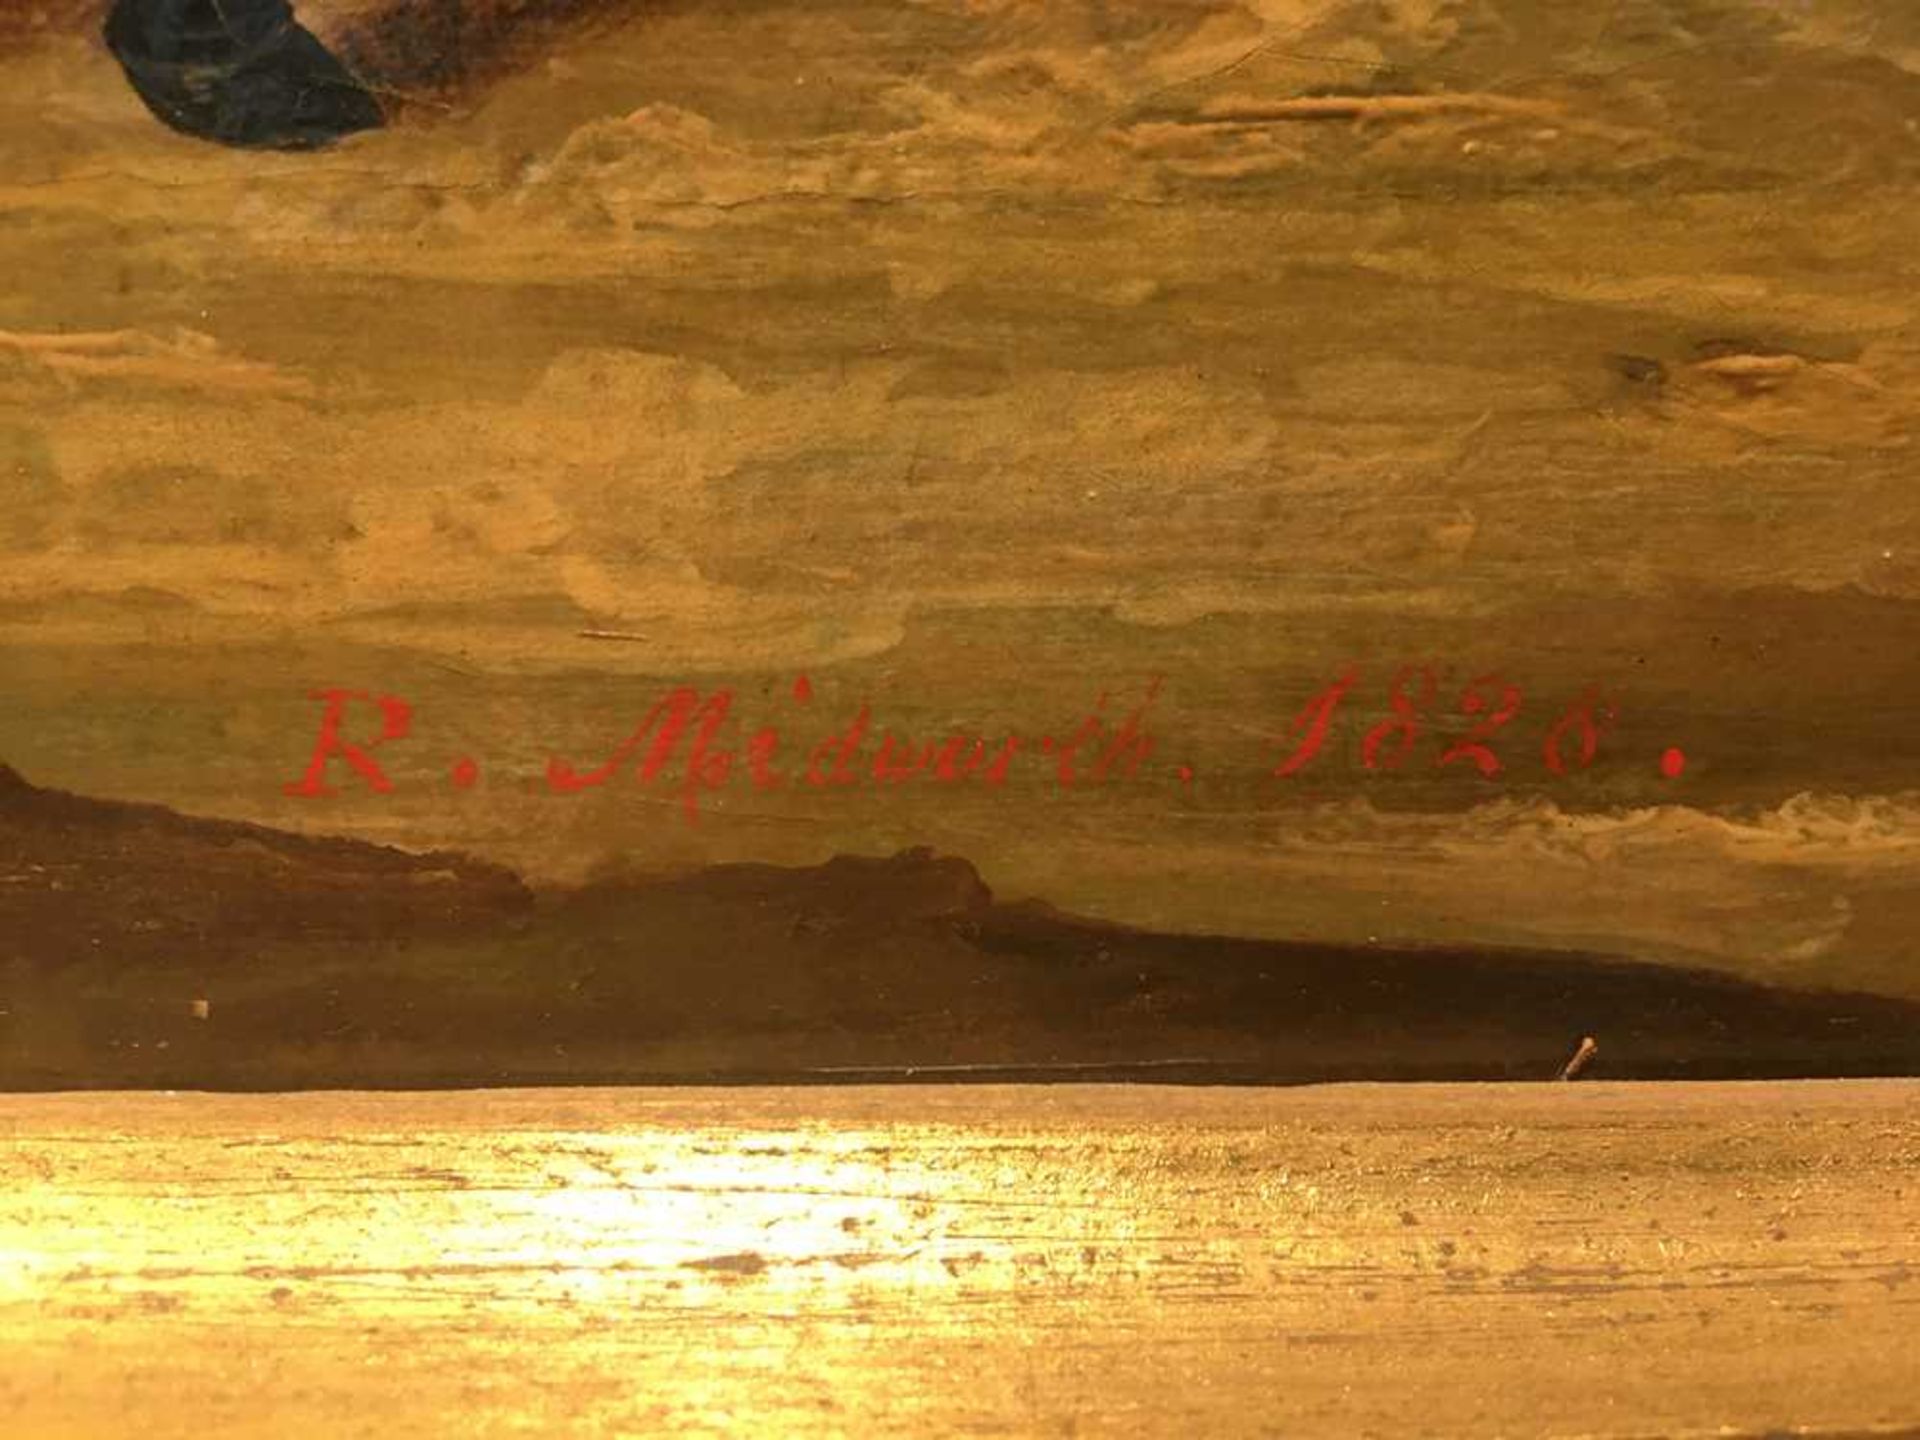 R**MIDWORTH (BRITISH 19TH CENTURY) MATILDA, WINNER OF ST.LEDGER 1827 WITH JAMES ROBINSON UP - Bild 5 aus 8